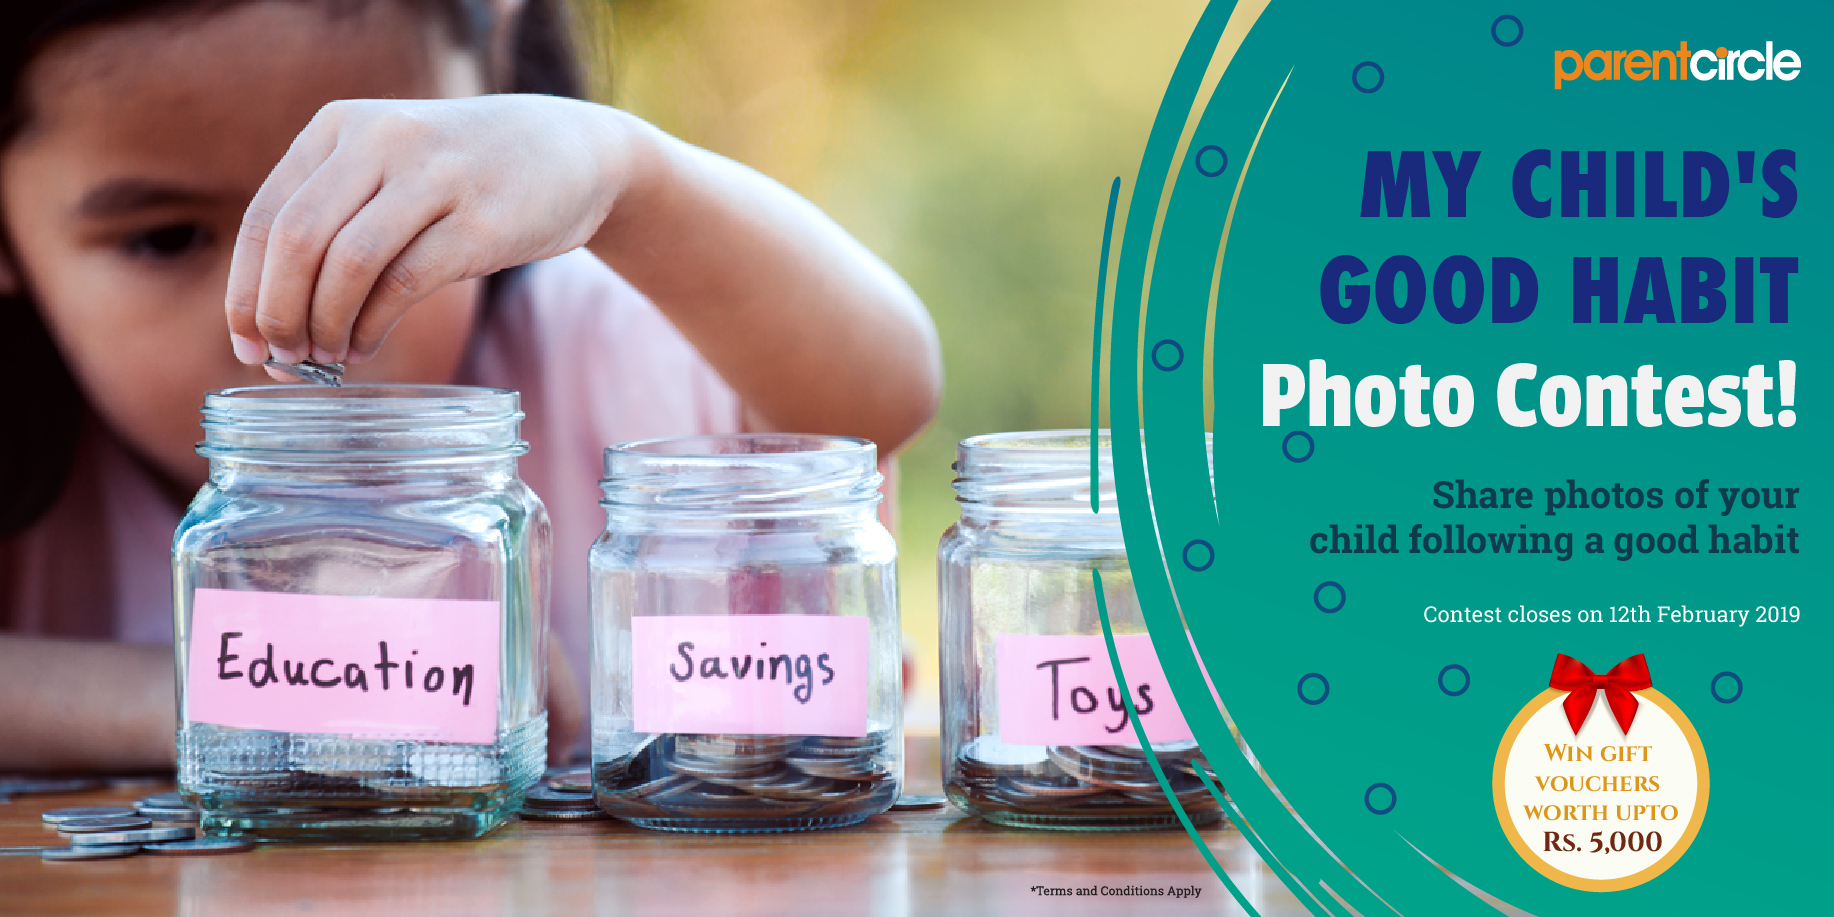 CONTEST ALERT - My Child's Good Habit Photo Contest!